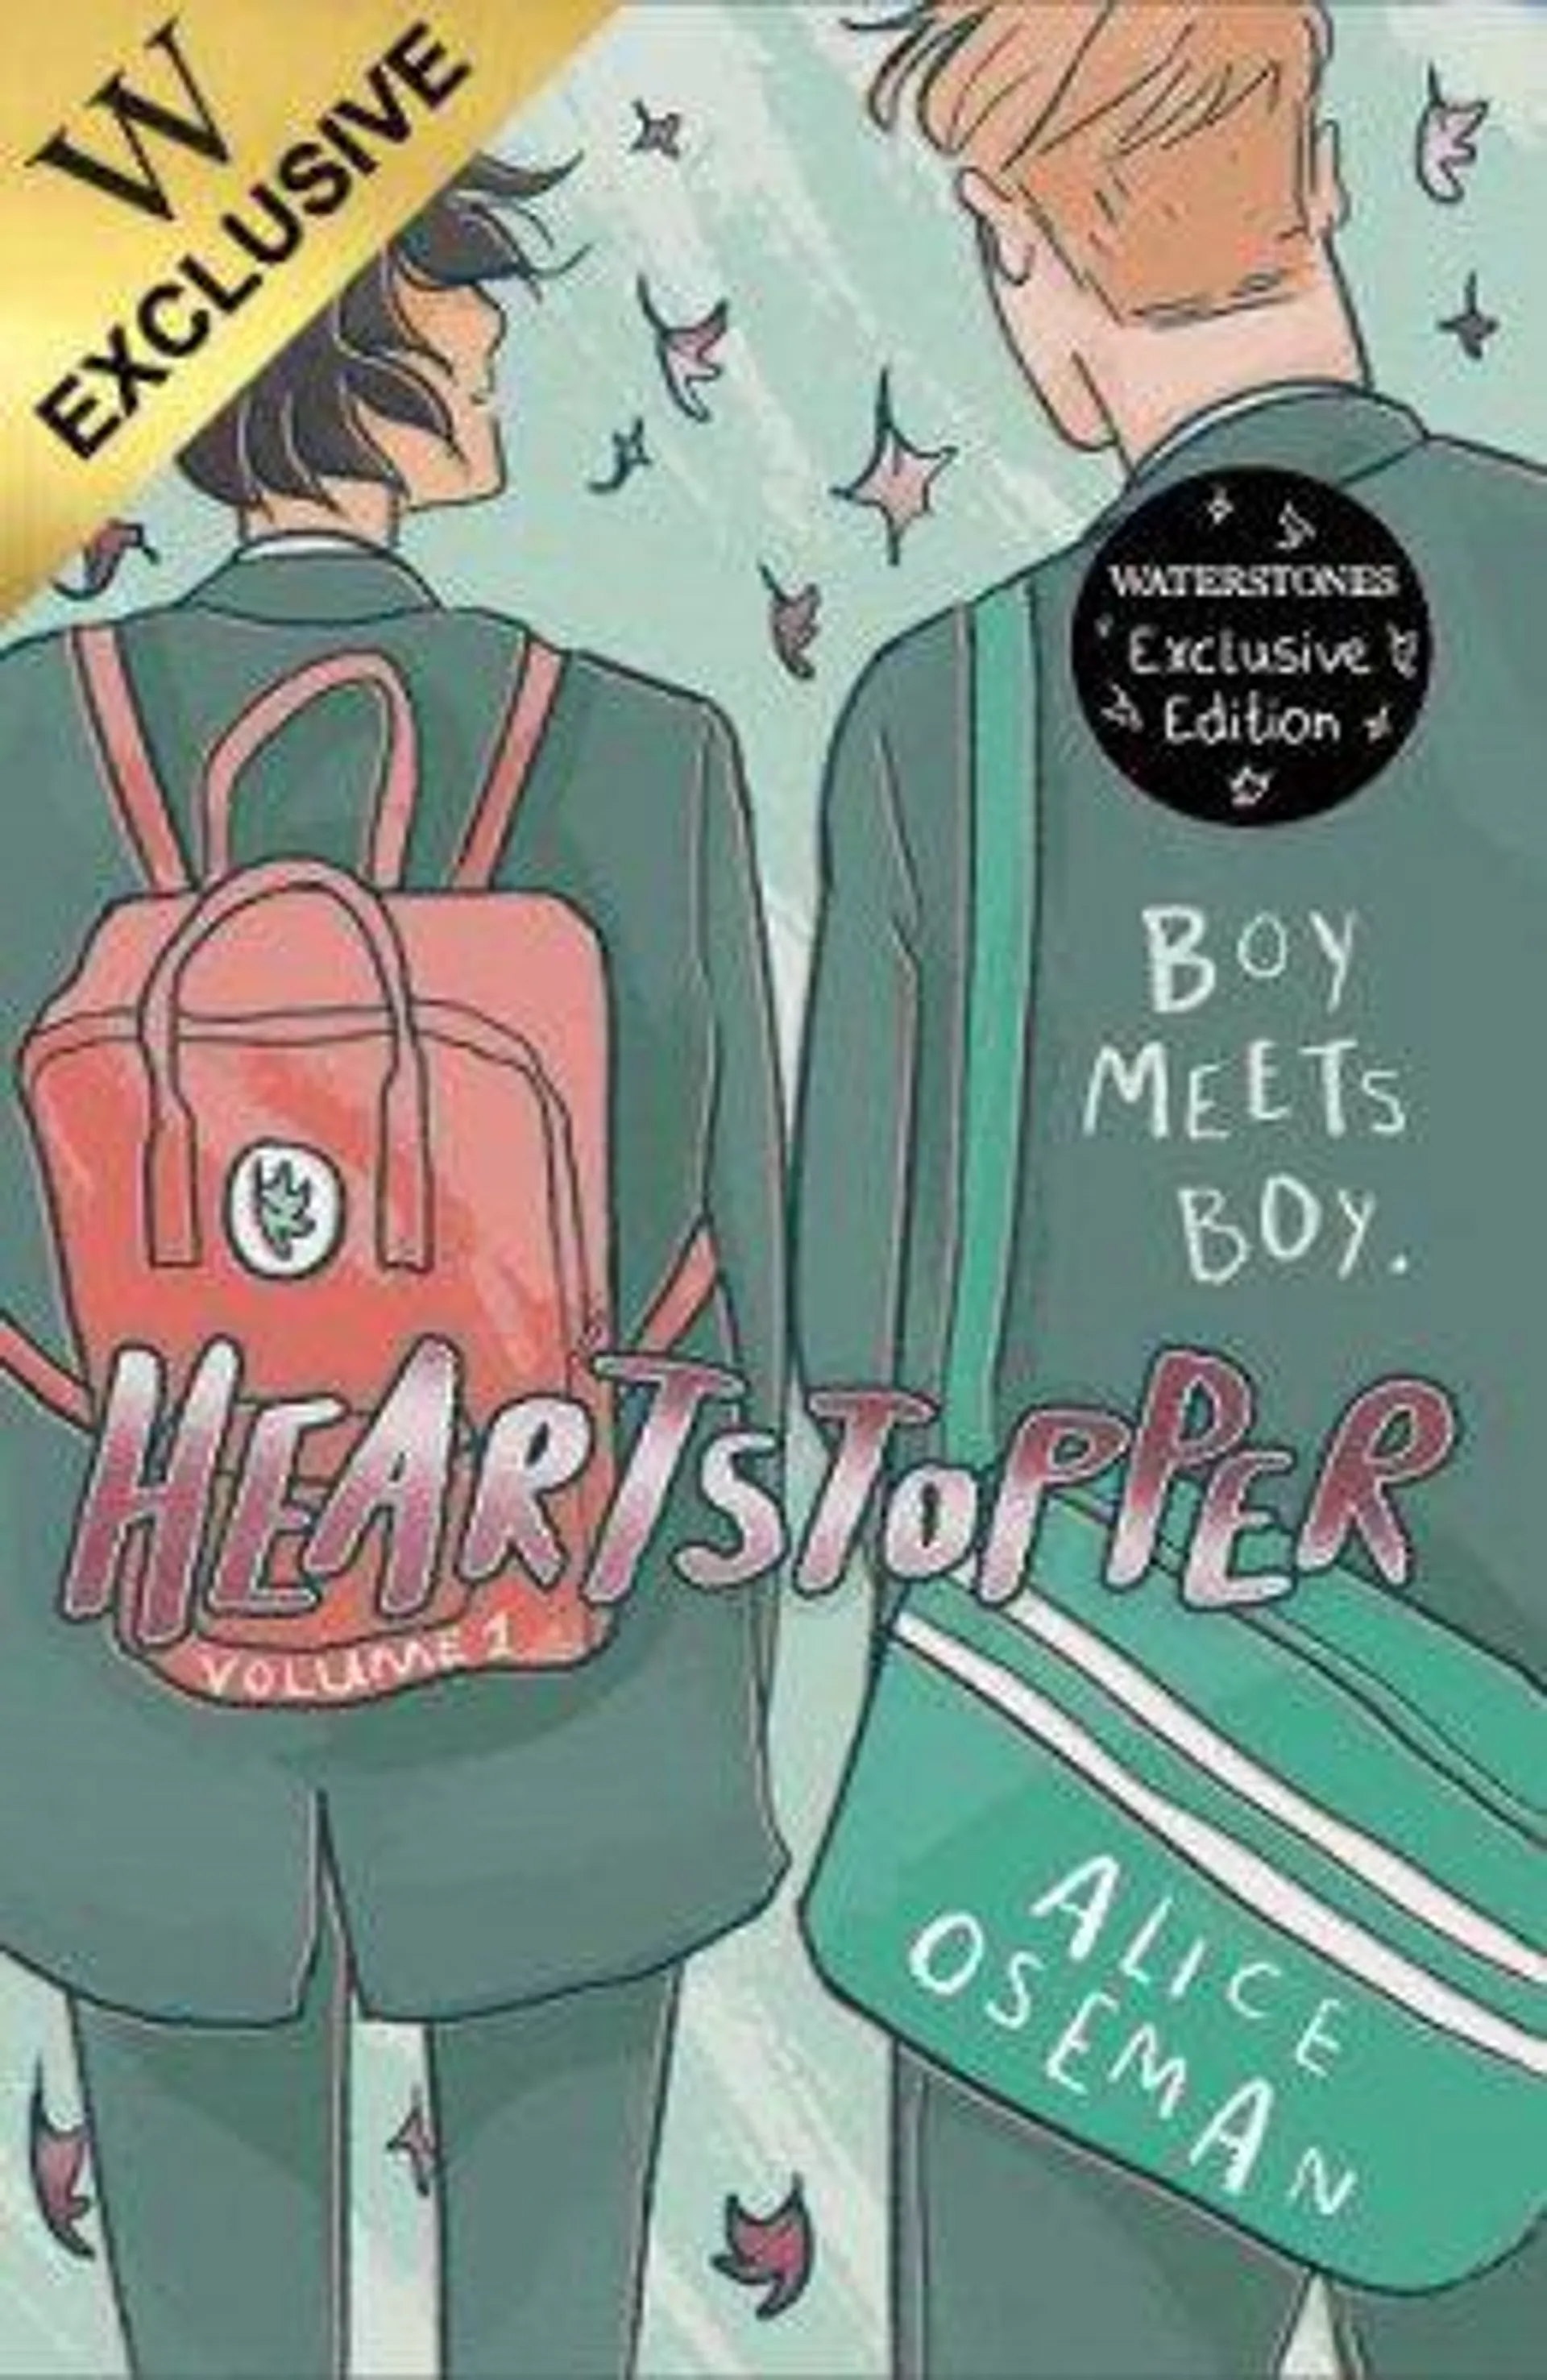 Heartstopper Volume 1: Exclusive Edition - Heartstopper (Paperback)